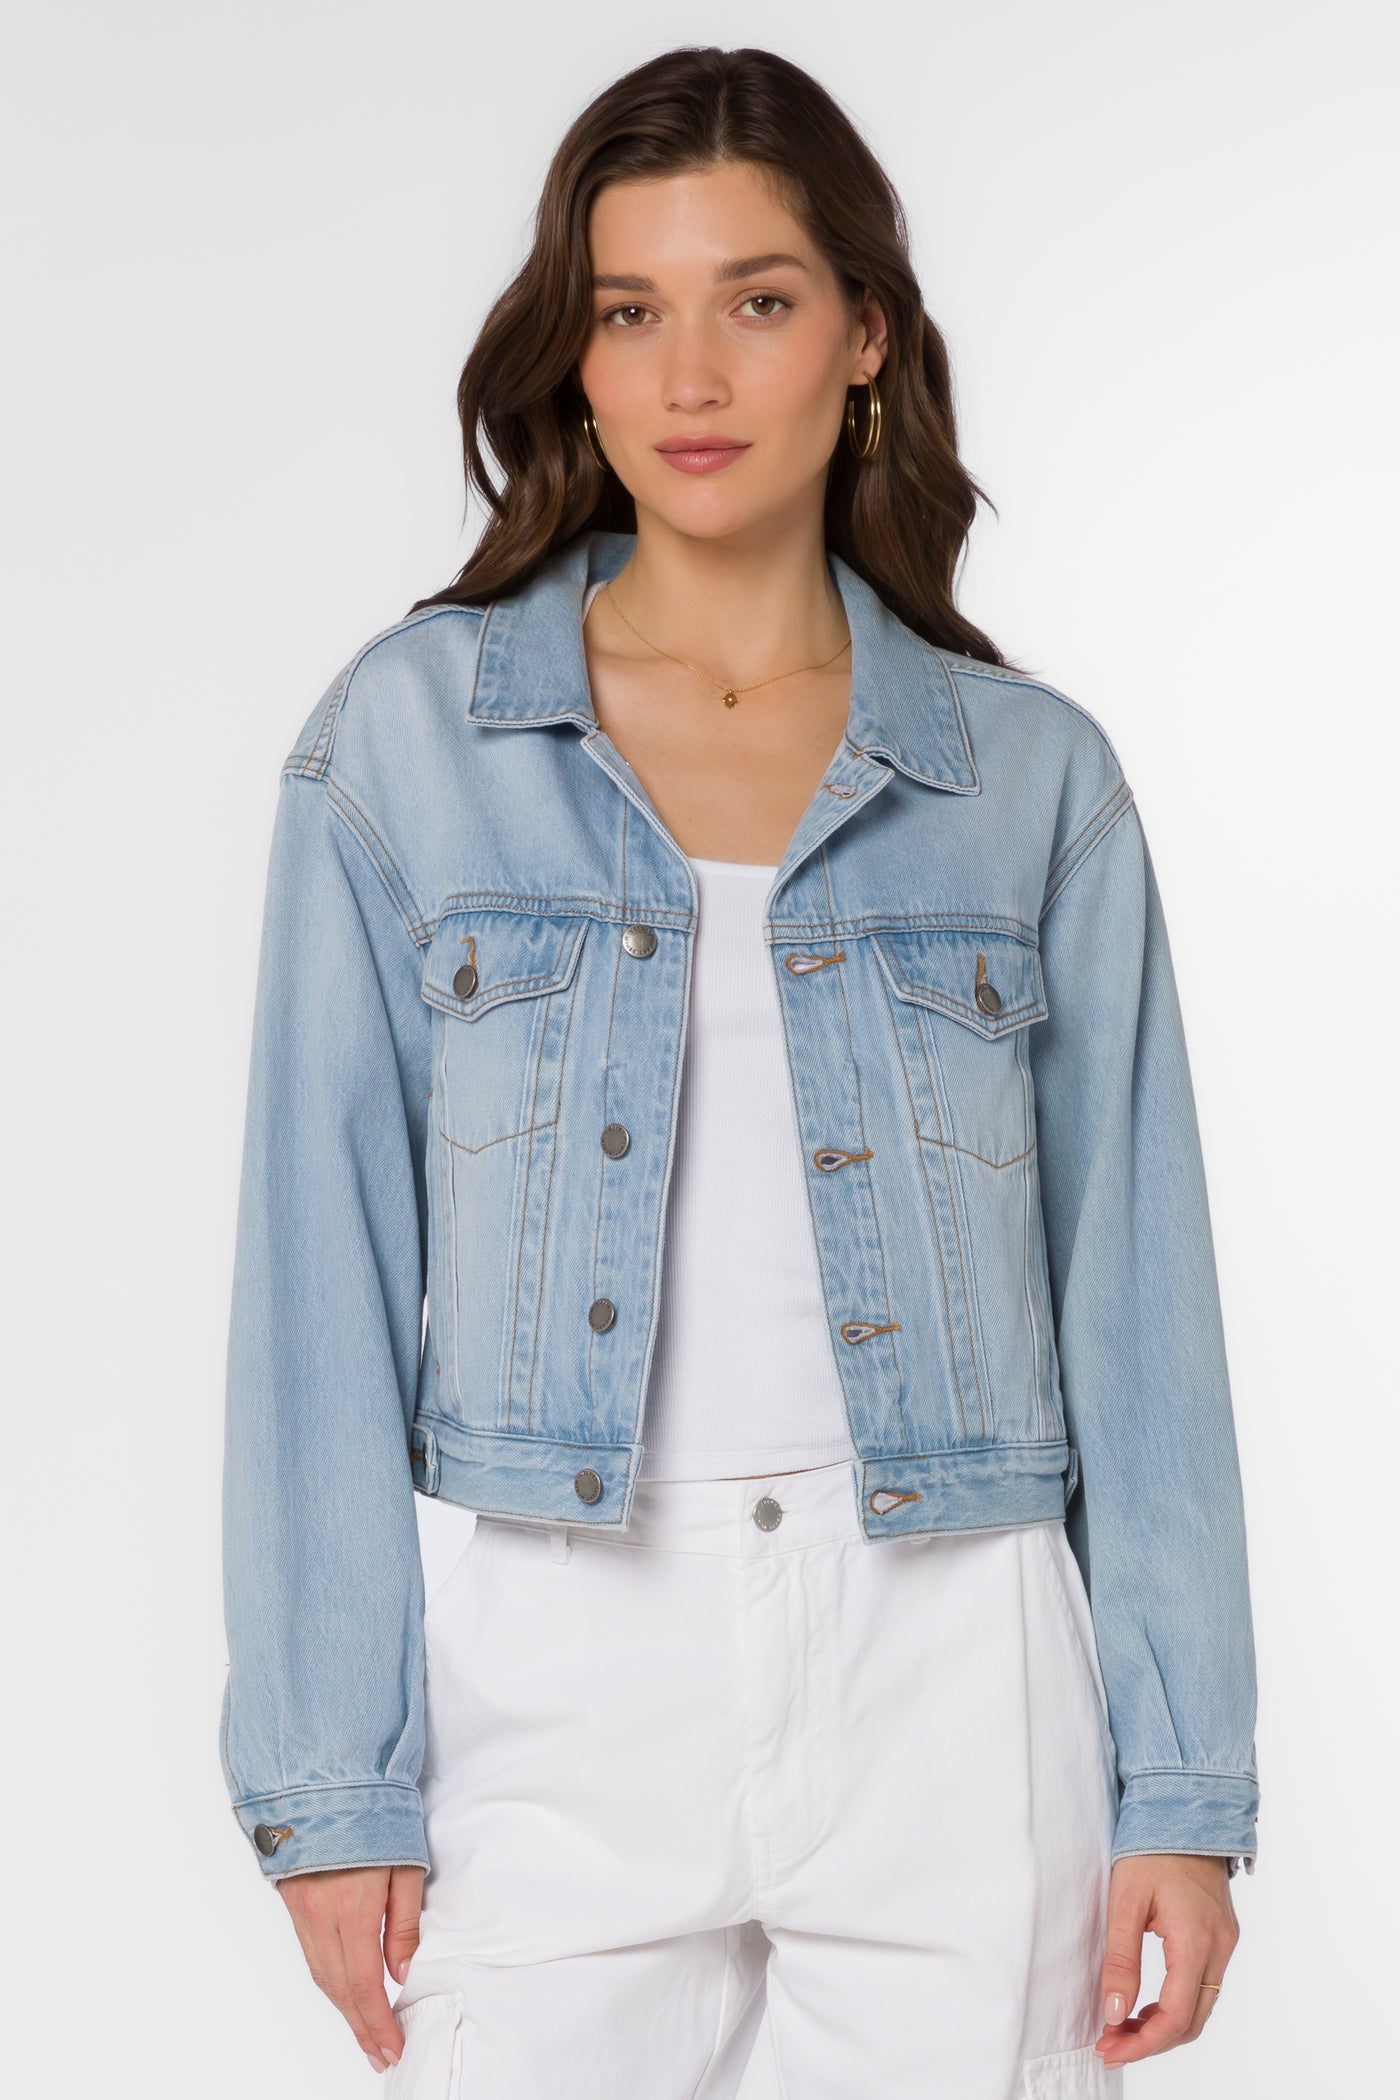 Jones Blue Denim Jacket - Jackets & Outerwear - Velvet Heart Clothing